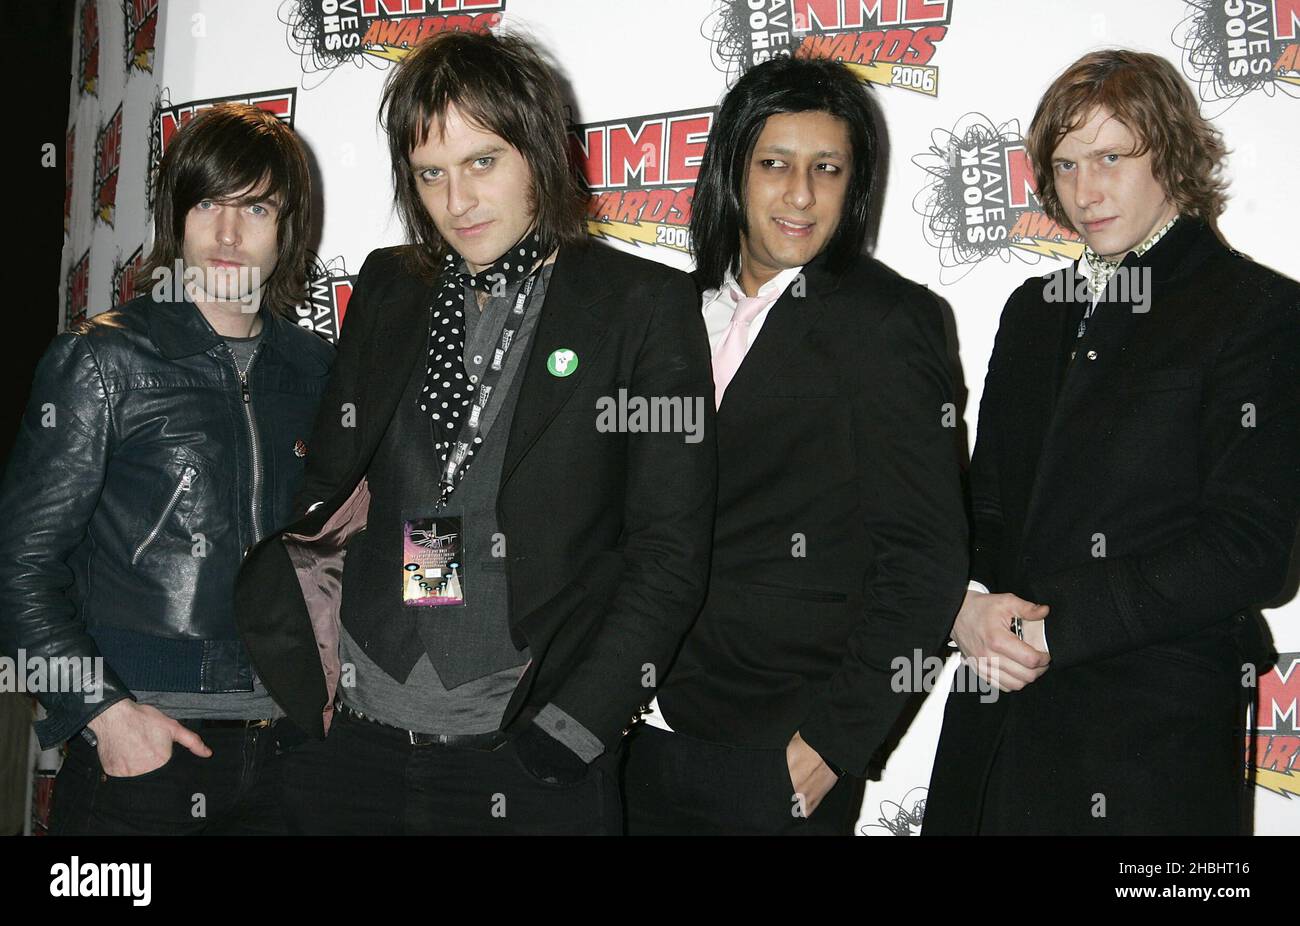 Peter Carr; Chris Peck; Kevin Chase; Shaz of Boy Kill Boy bei der Ankunft bei den Schockwaves NME Awards 2006 im Hammersmith Palais in London. Stockfoto